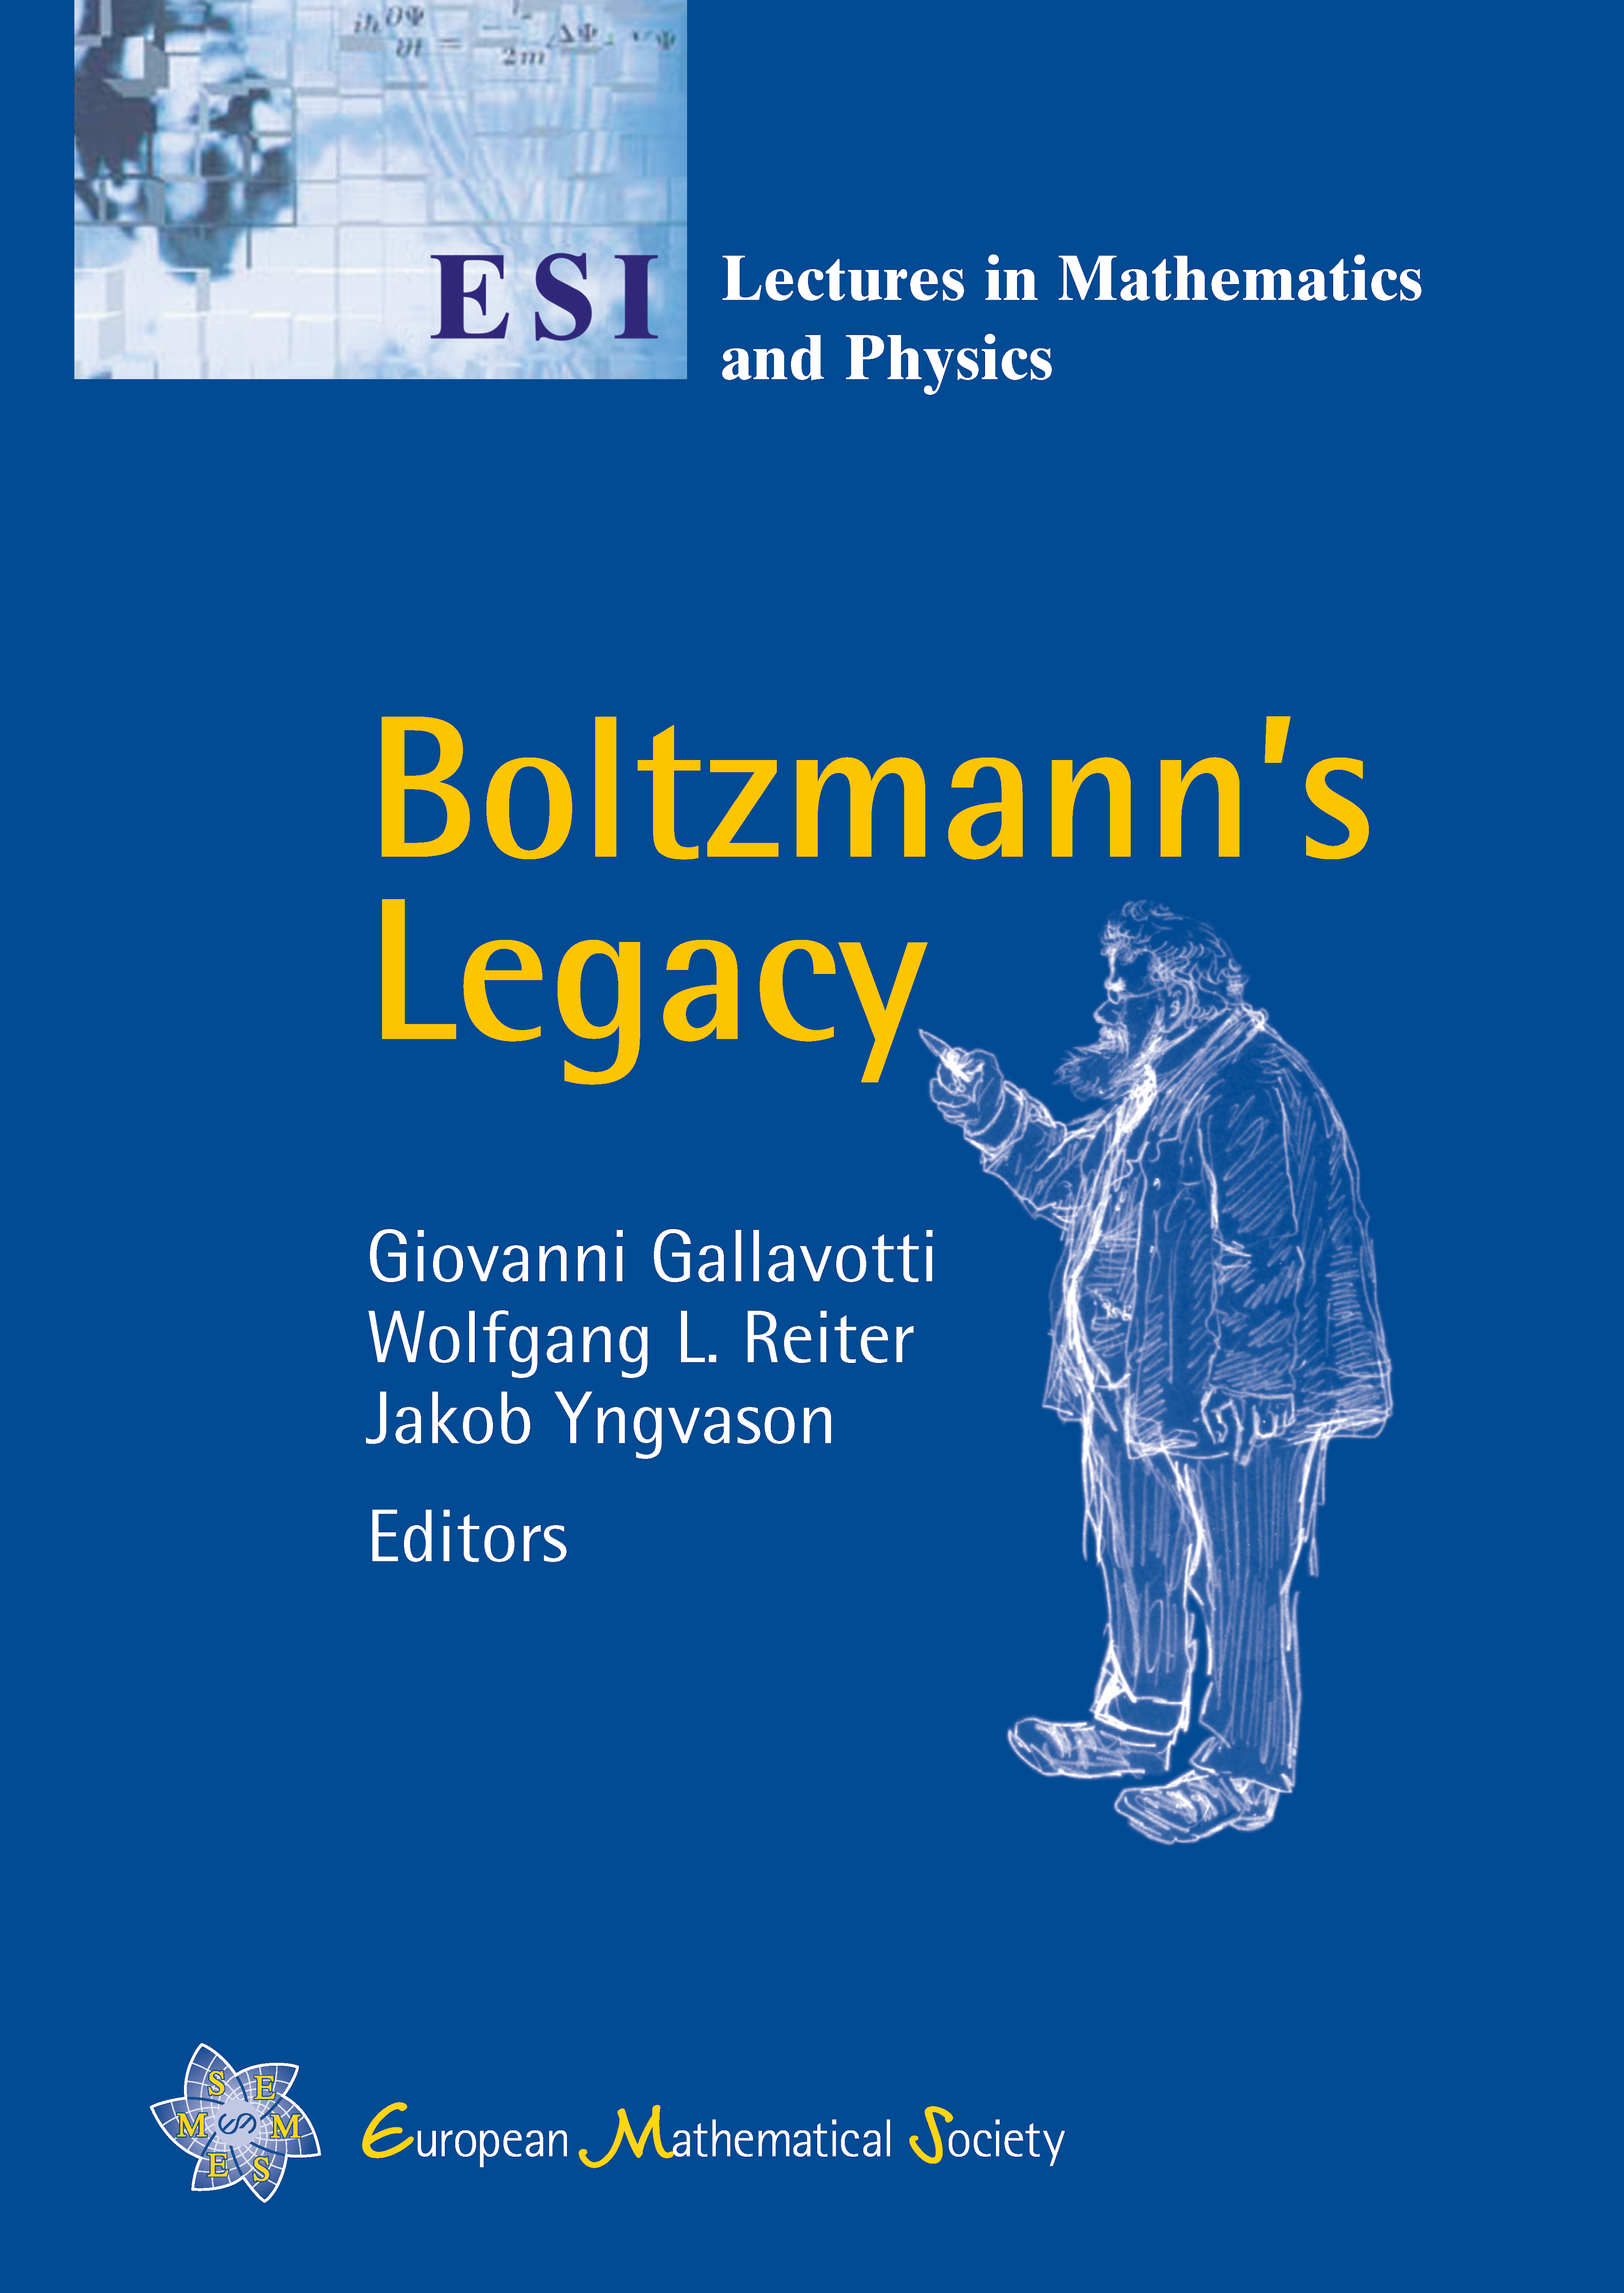 Boltzmann, ergodic theory, and chaos cover